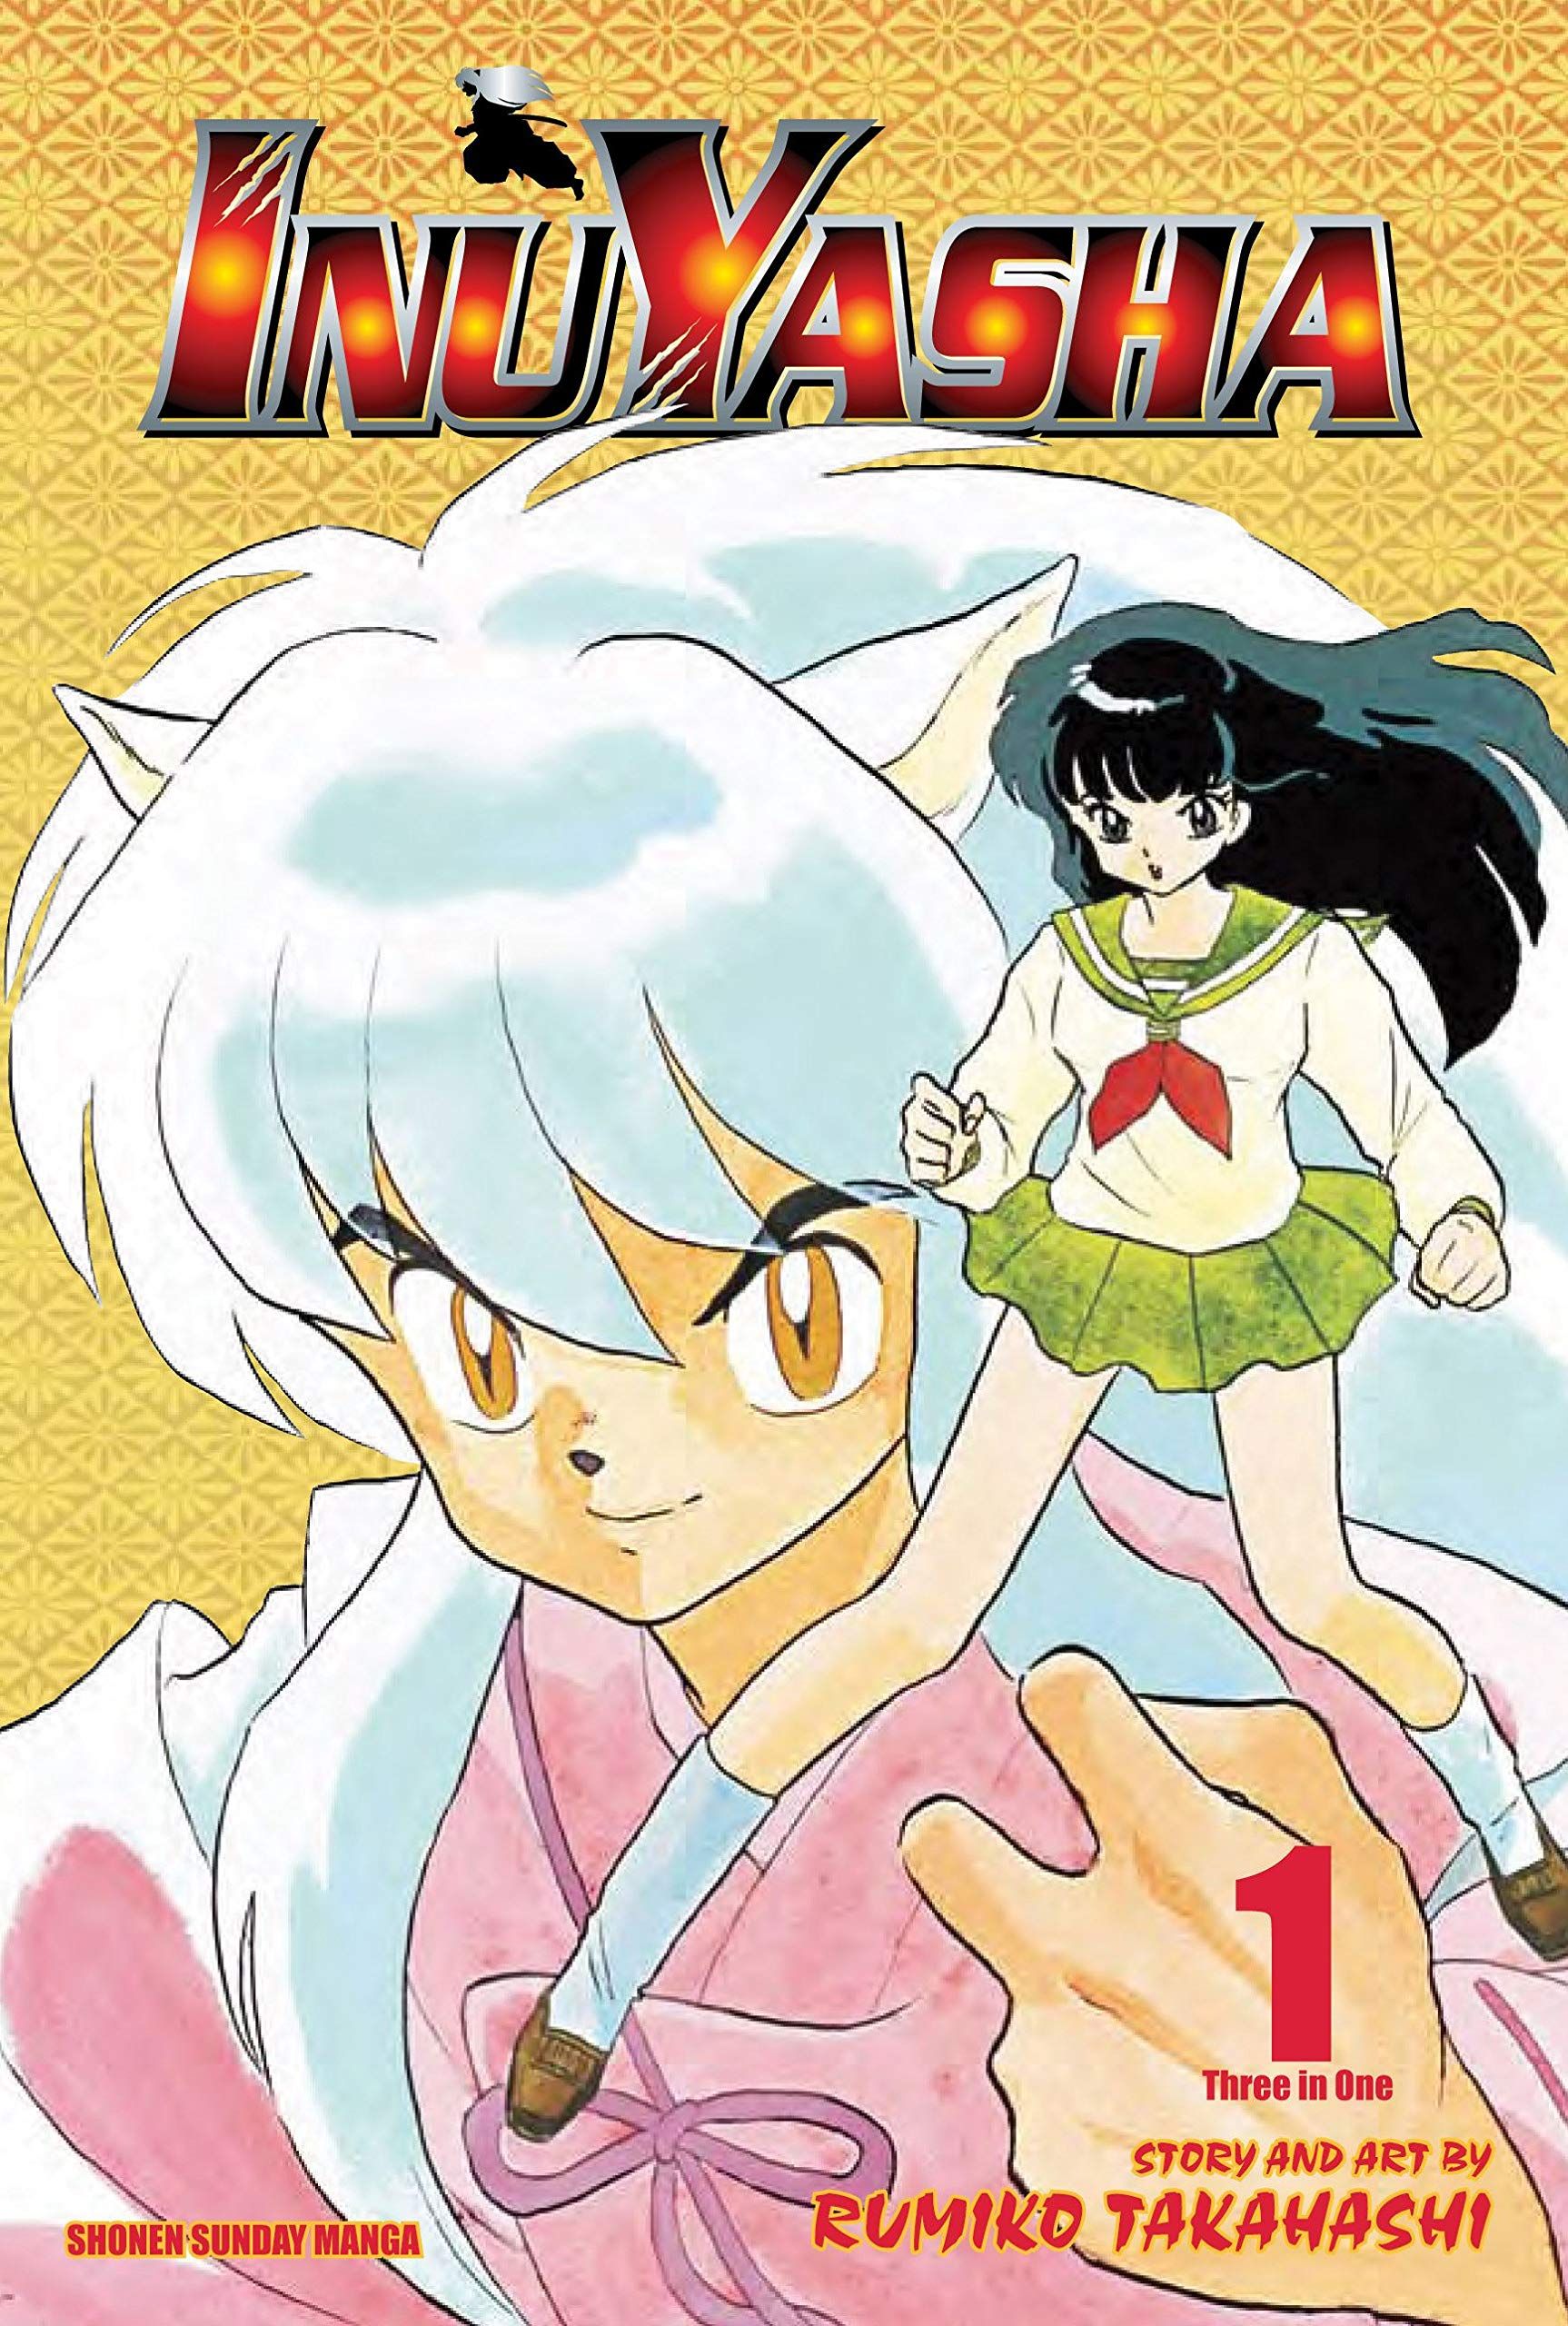 Inuyasha by Rumiko Takahashi book cover